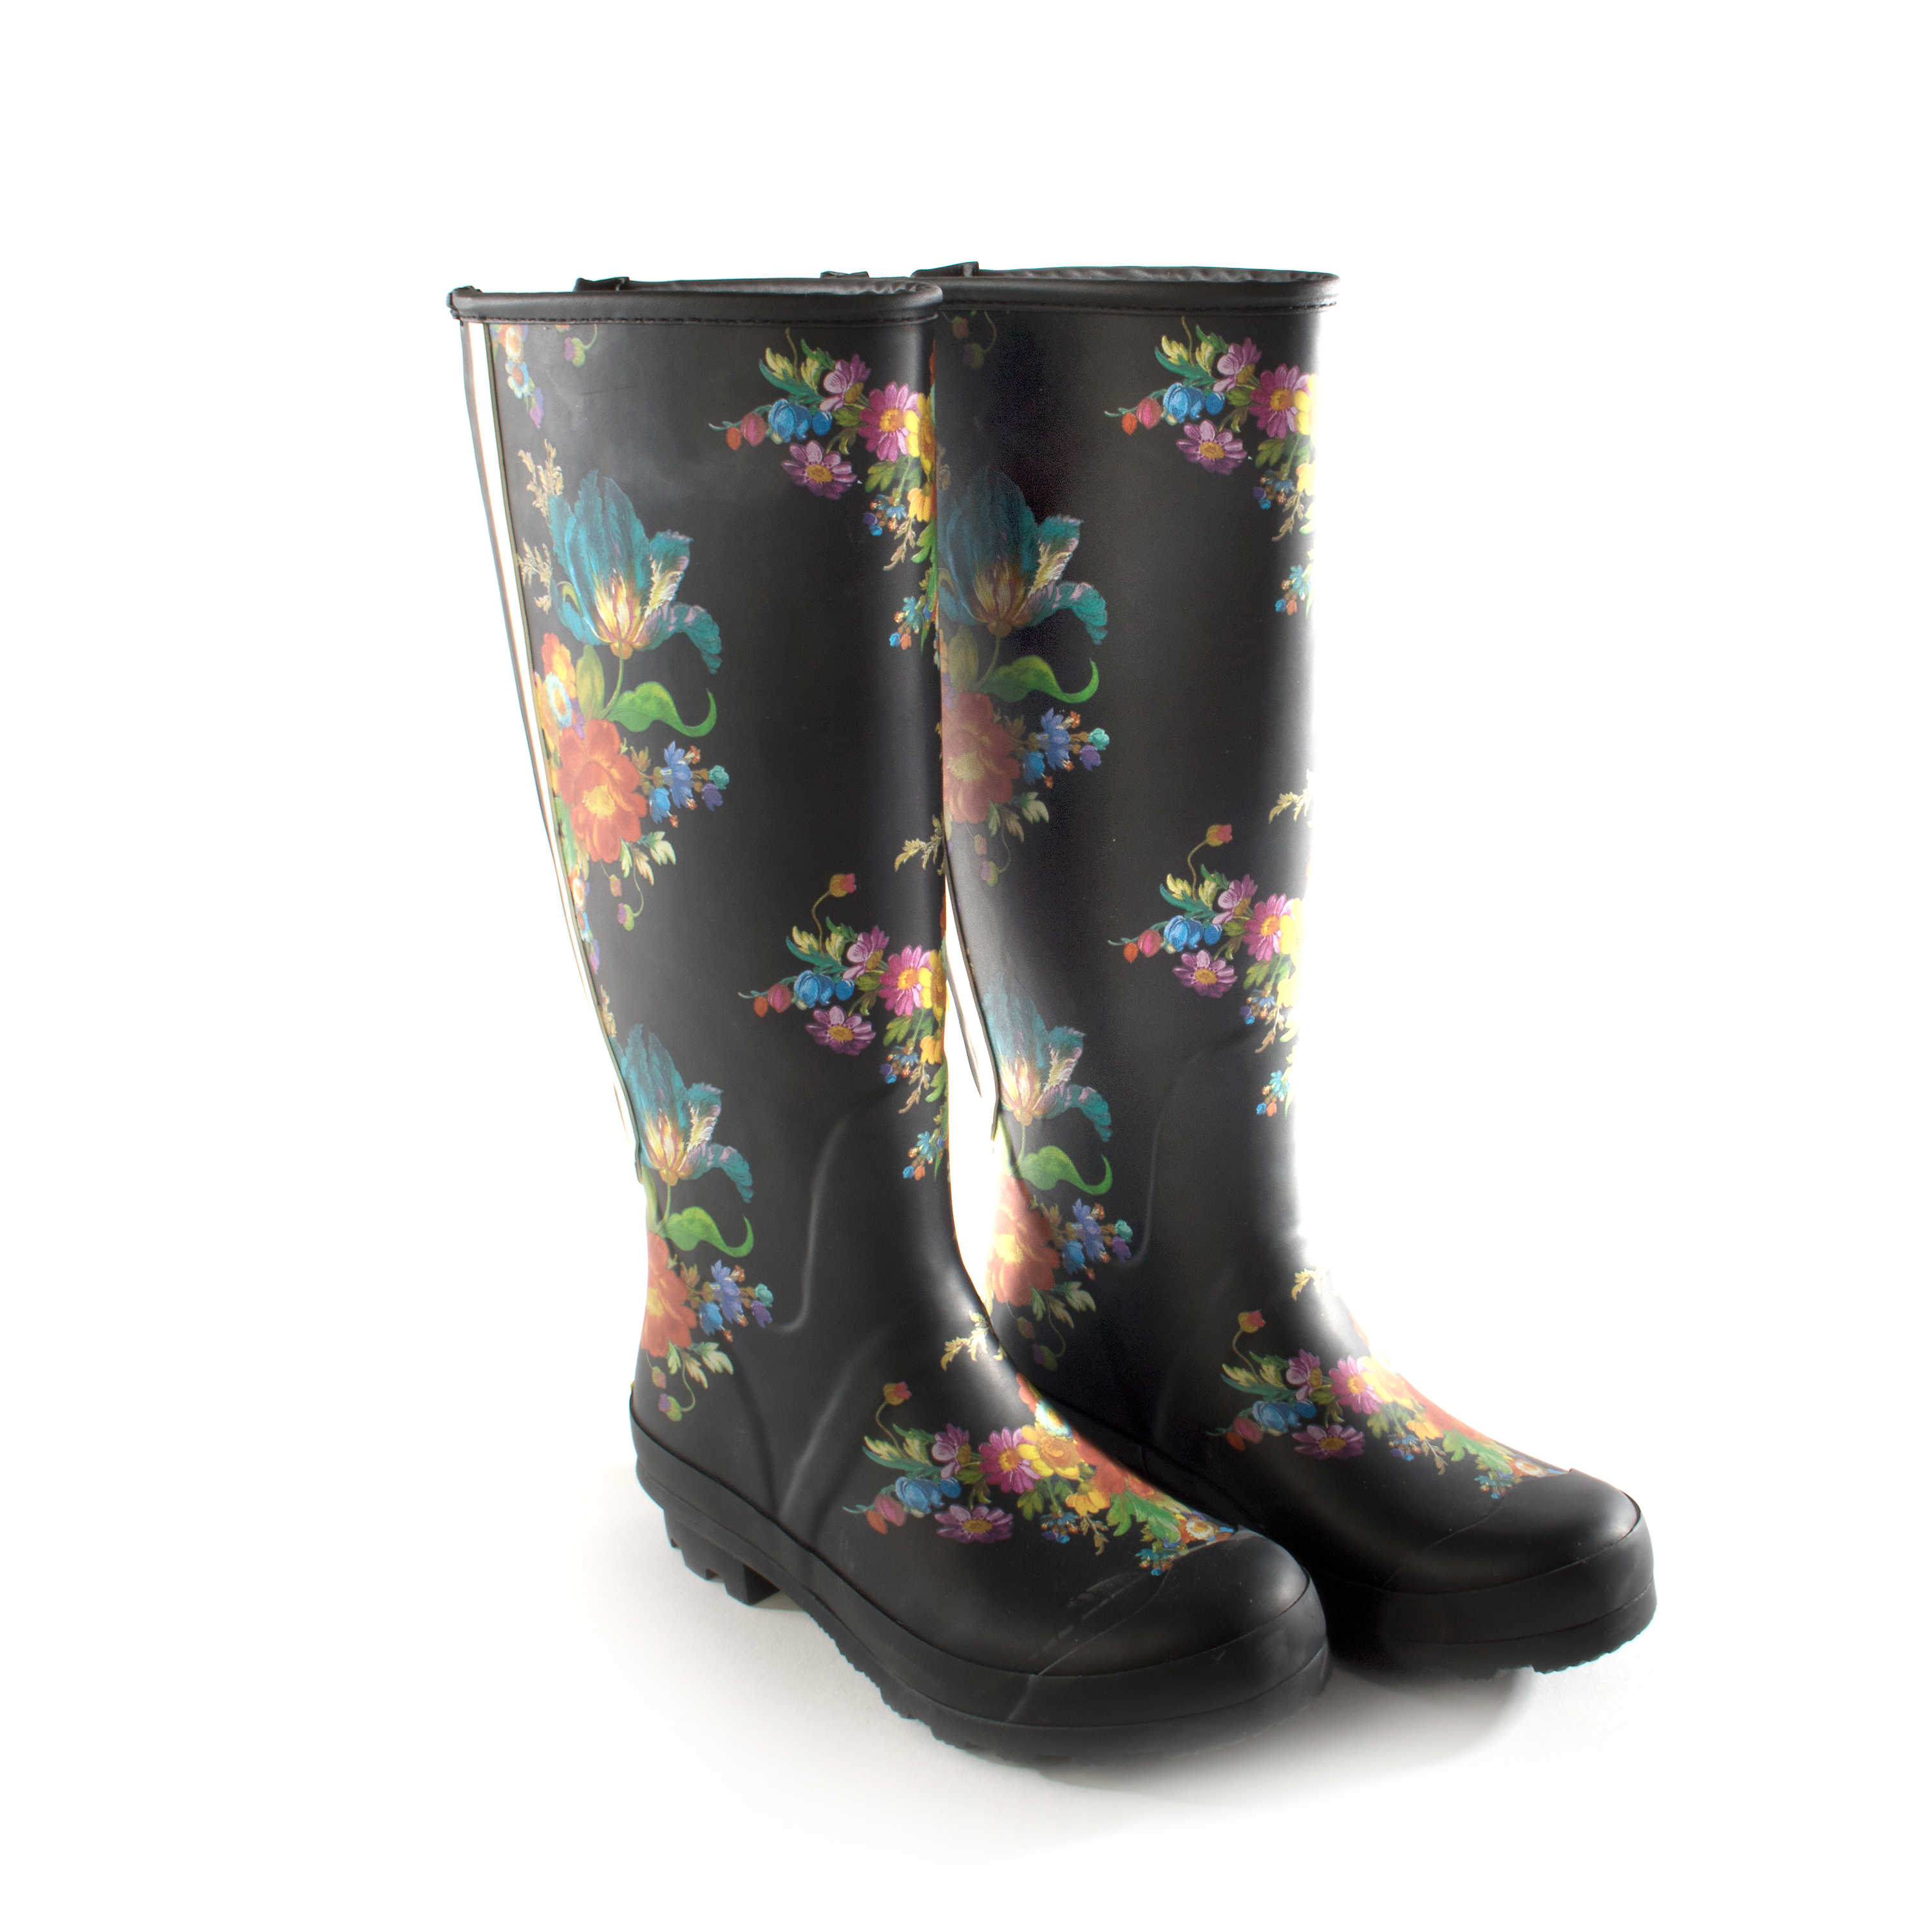 Flower Market Rain Boots - Tall - Size 5 mackenzie-childs Panama 0